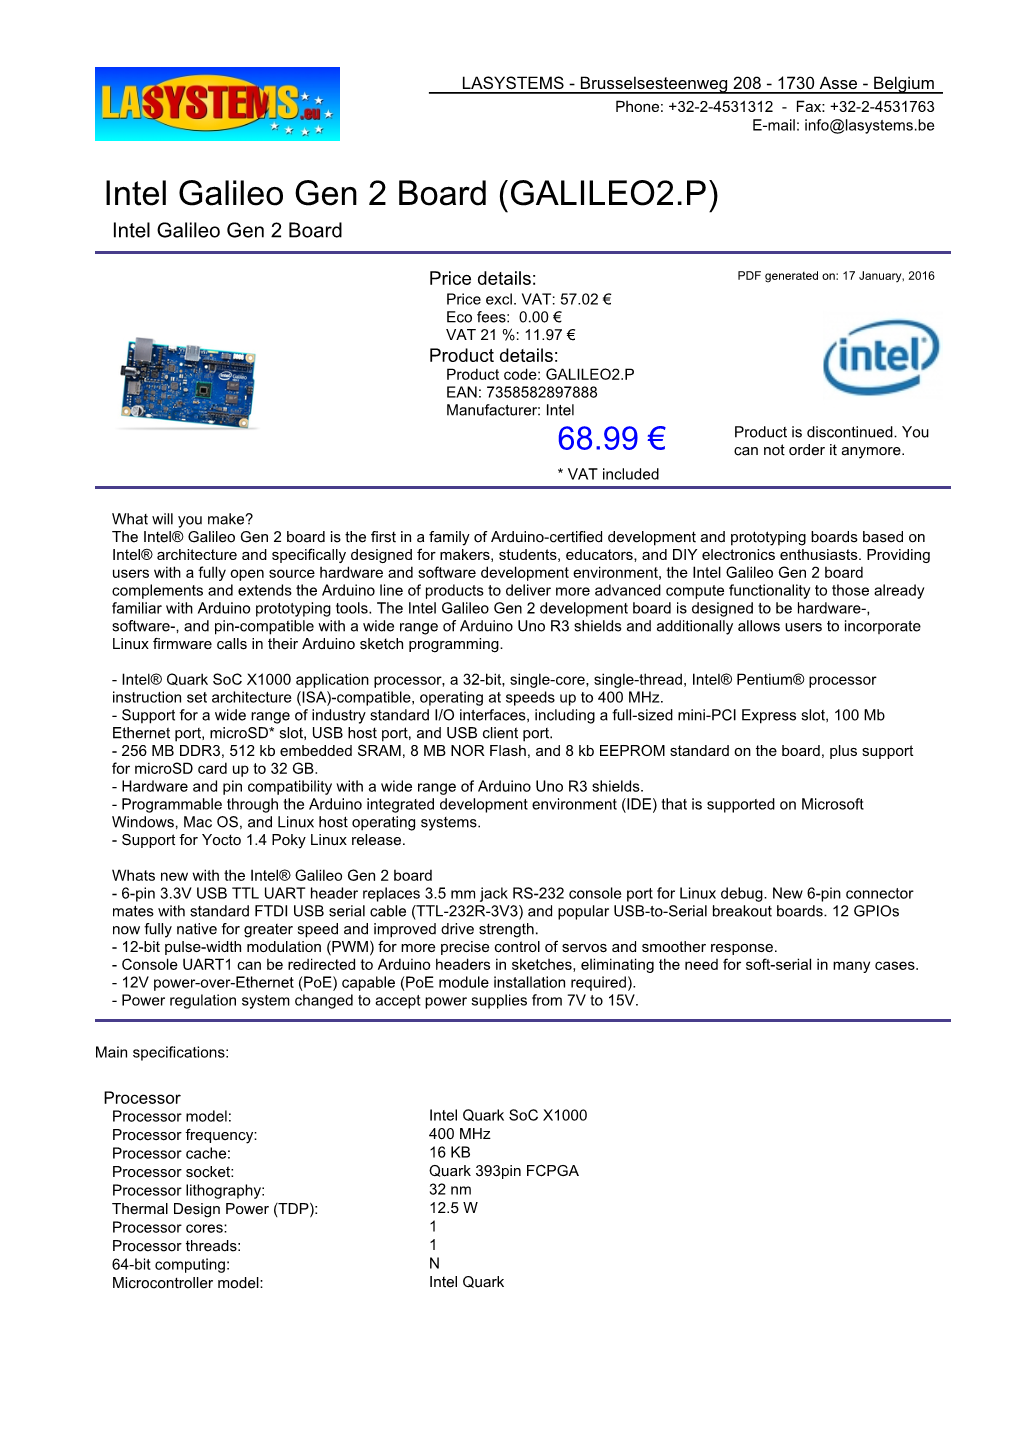 Intel Galileo Gen 2 Board (GALILEO2.P) Intel Galileo Gen 2 Board